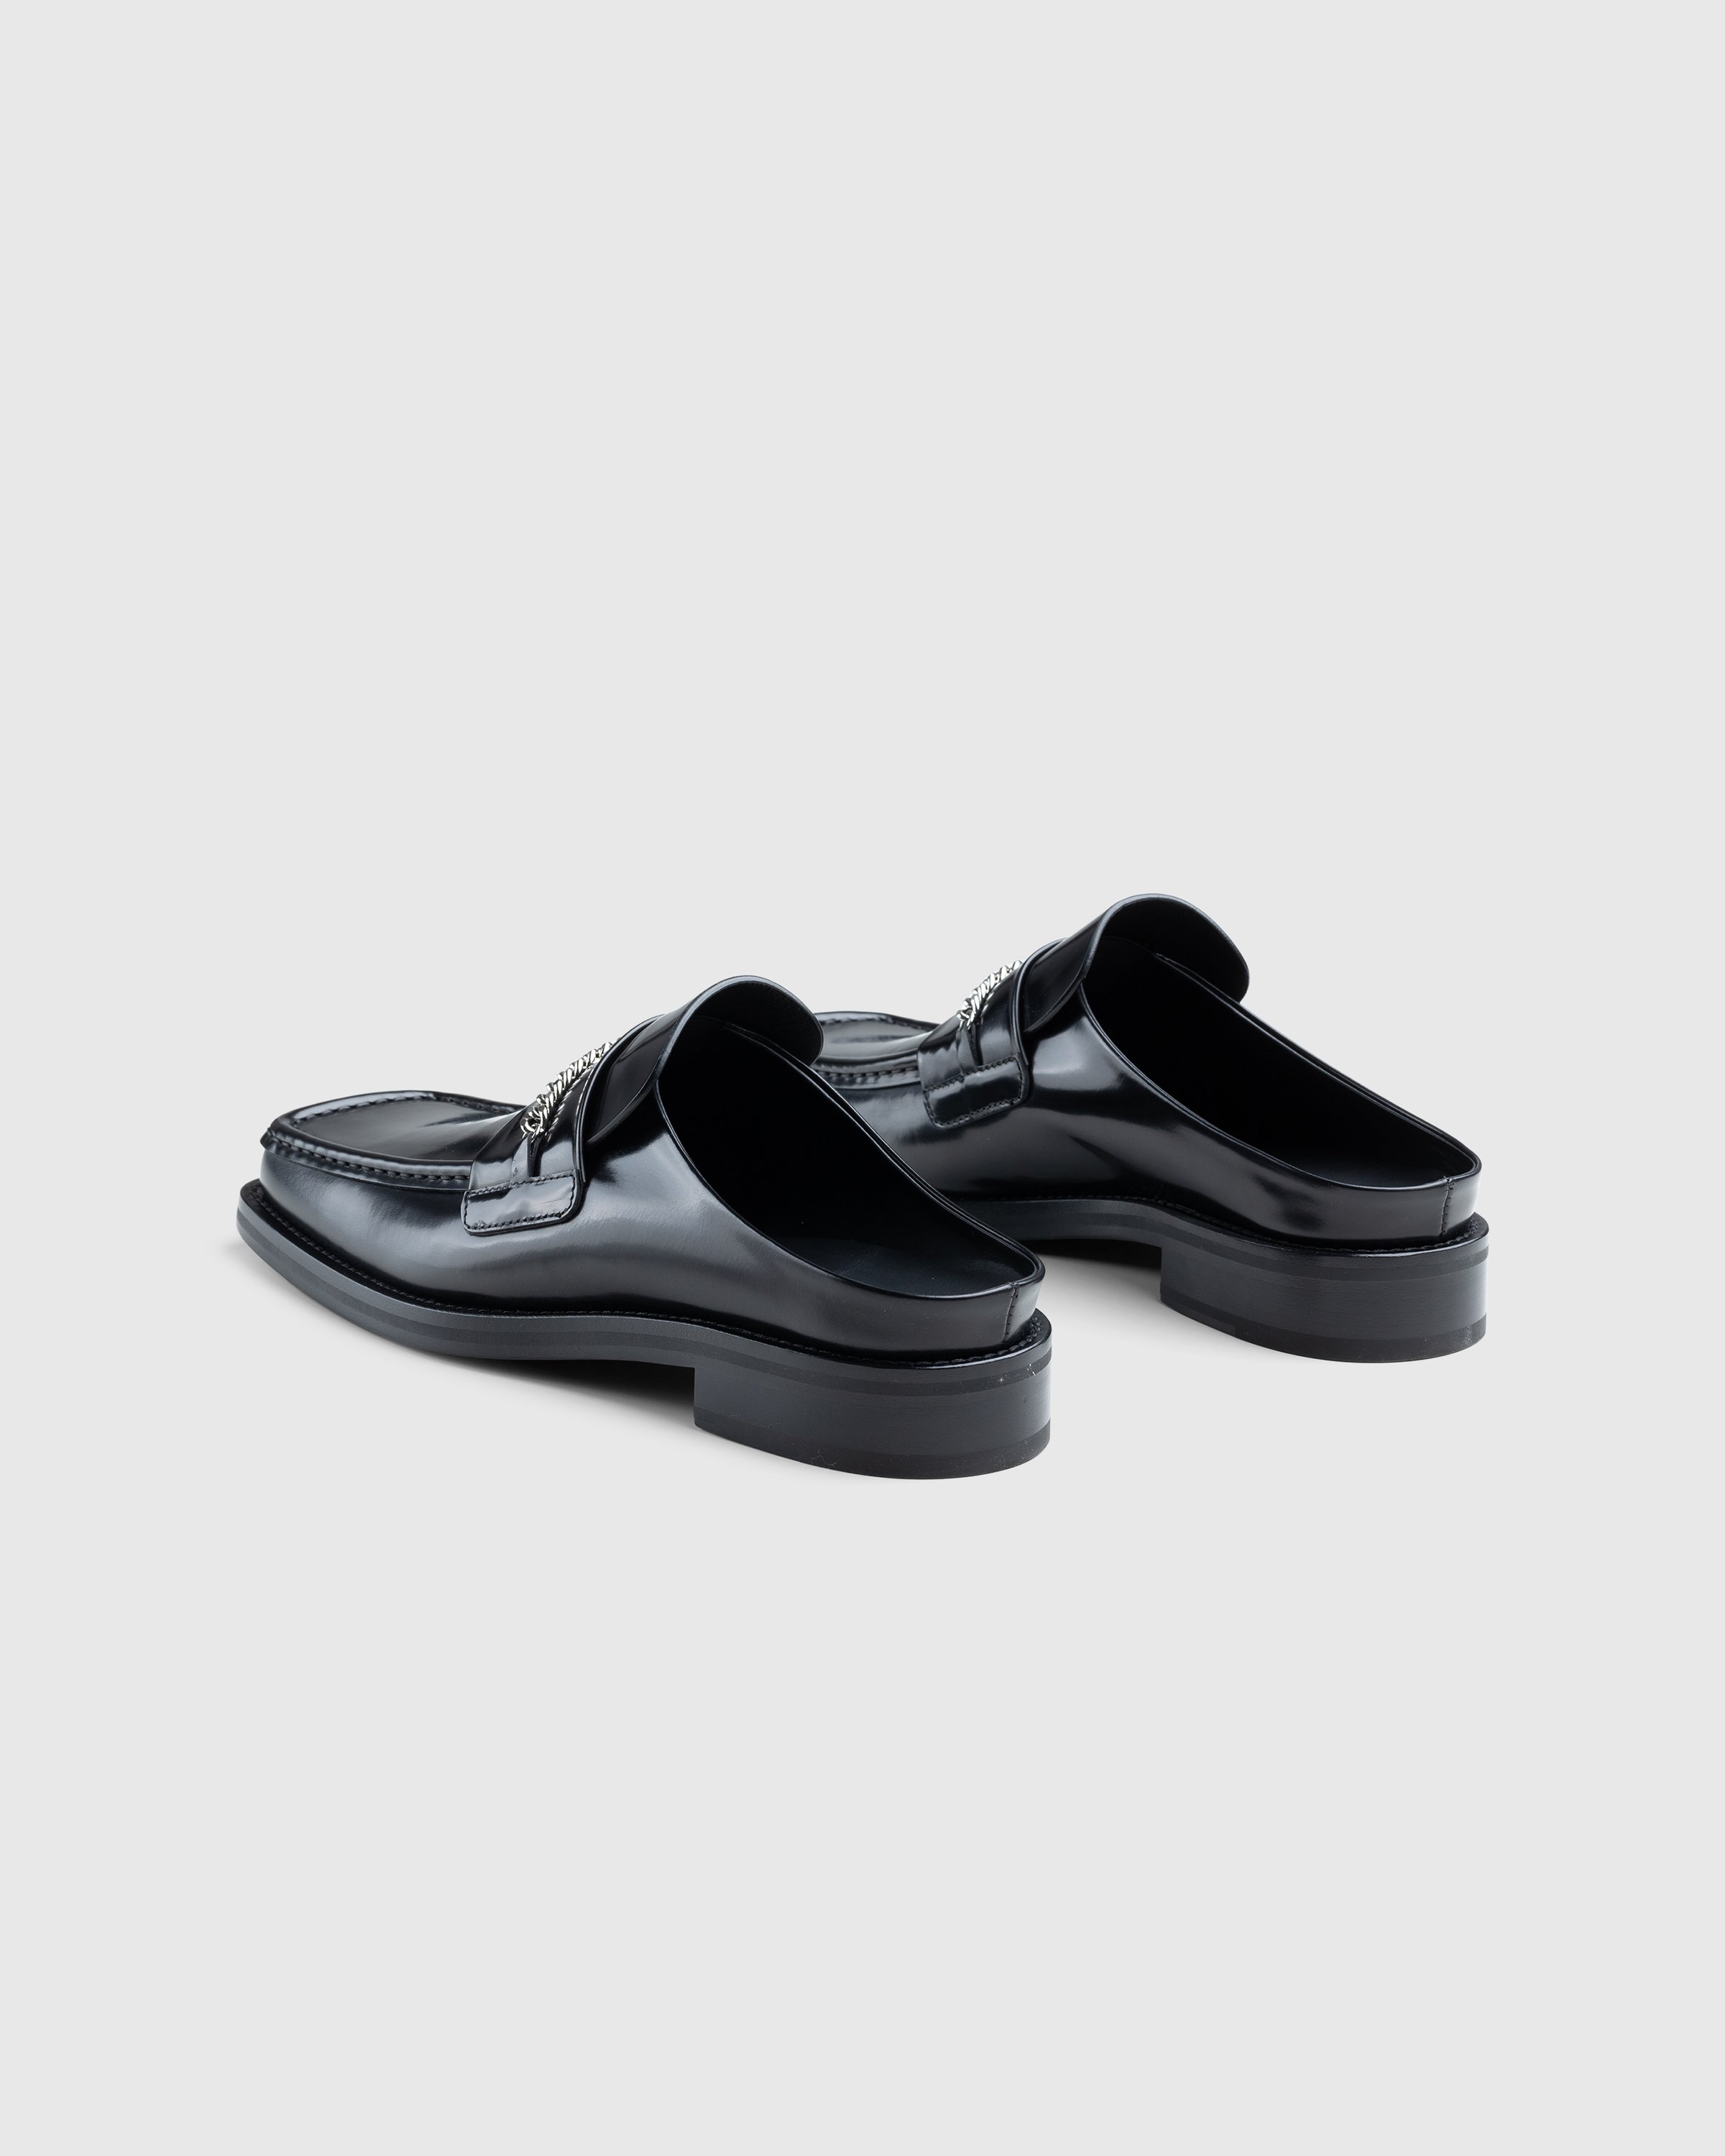 Martine Rose - Square Toe Mule High Shine Black - Footwear - Black - Image 4